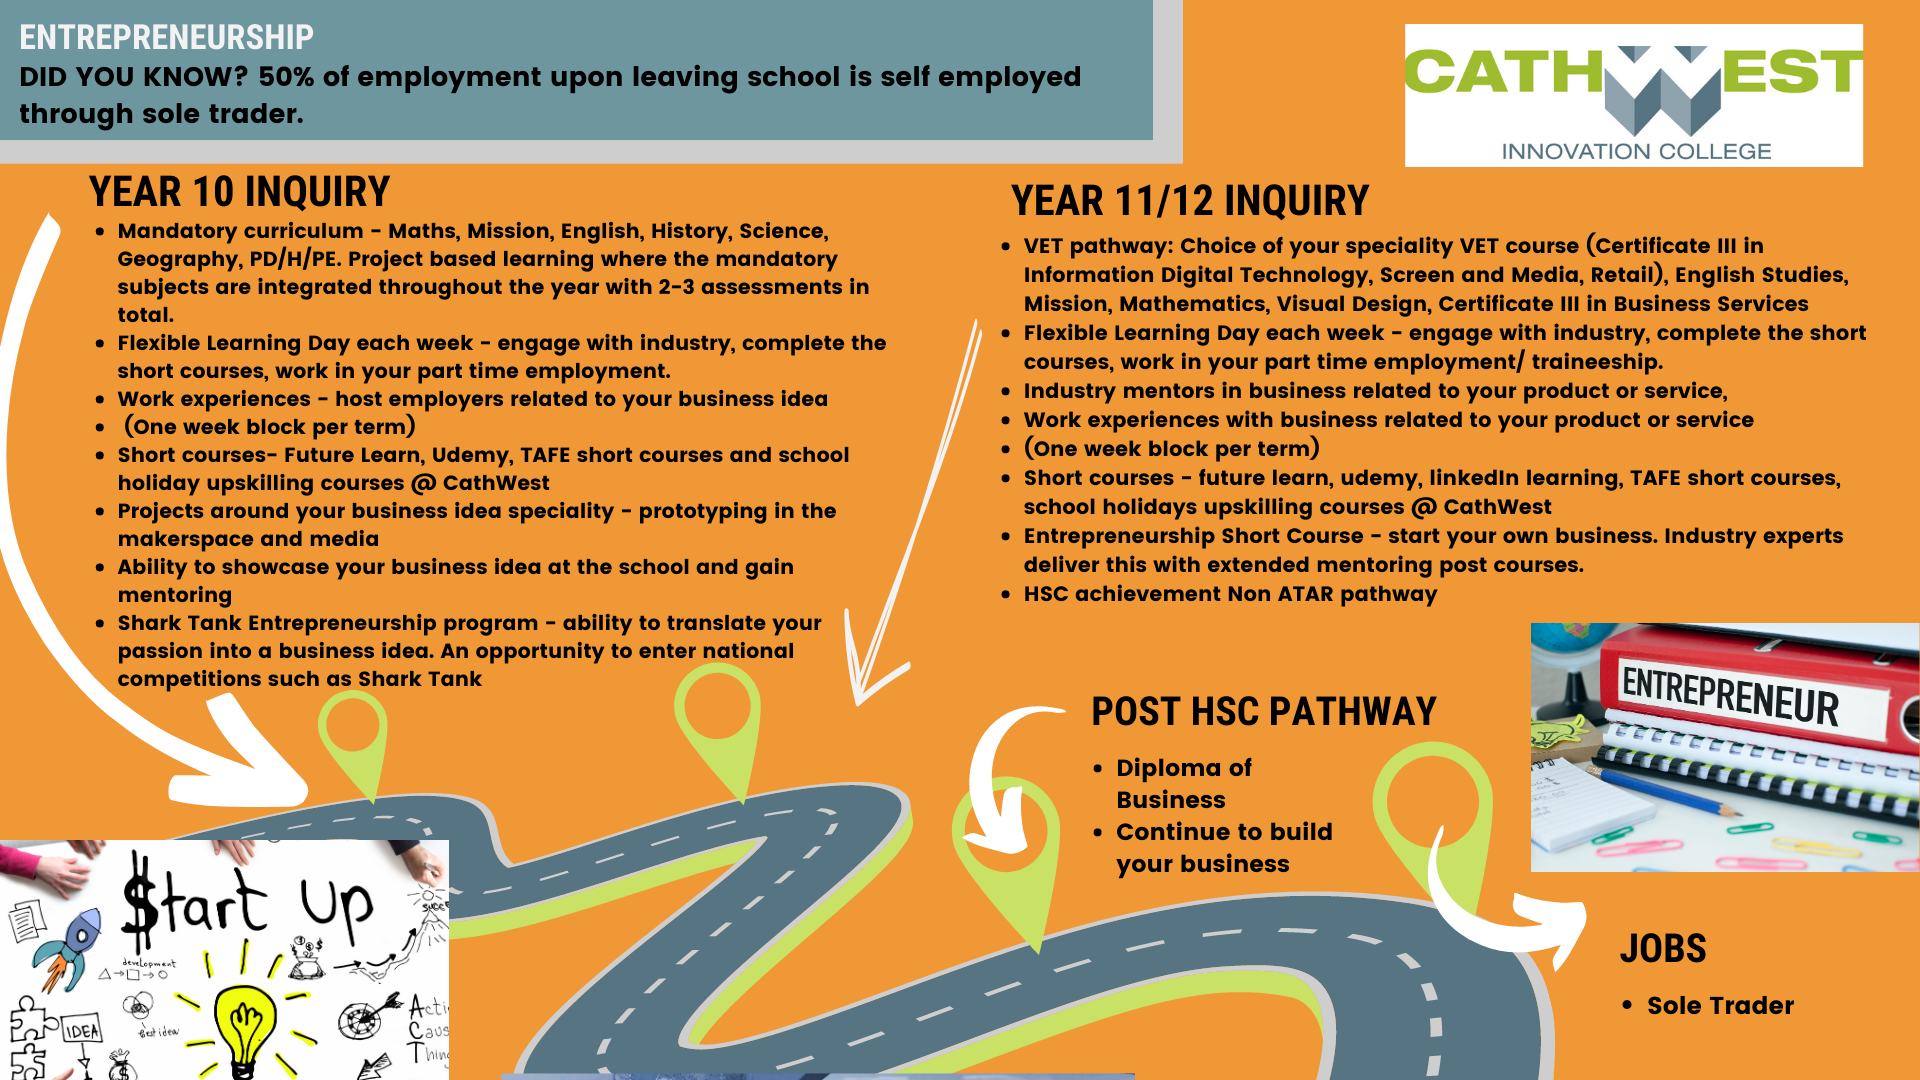 Entrepreneurship Career Pathways at CathWest Innovation College